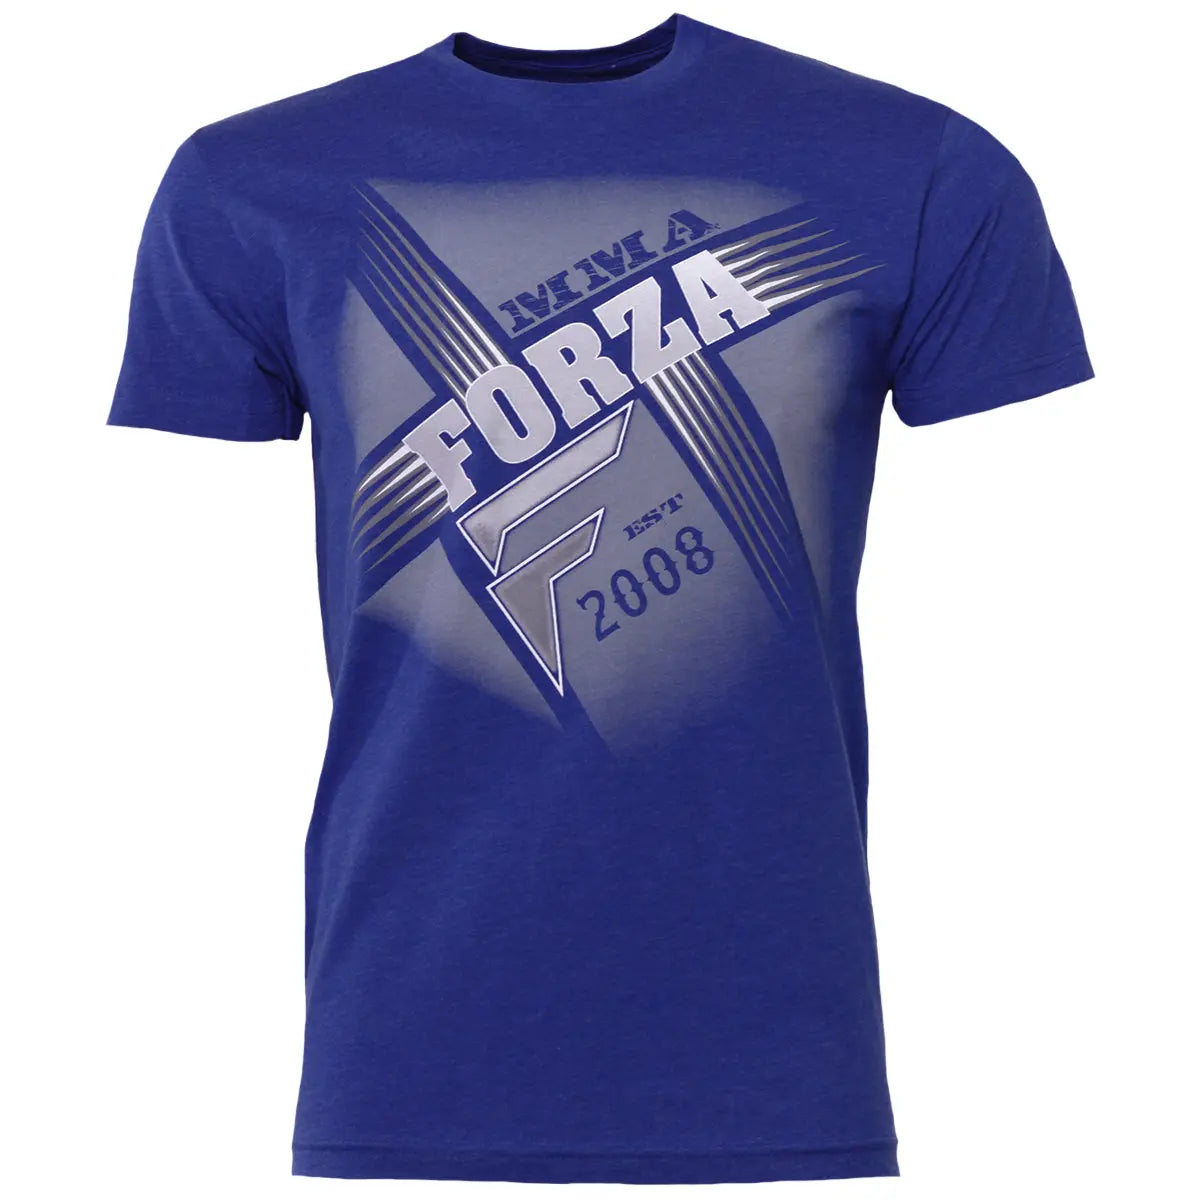 Forza Sports "Crossroads" MMA T-Shirt - Royal Blue Forza Sports